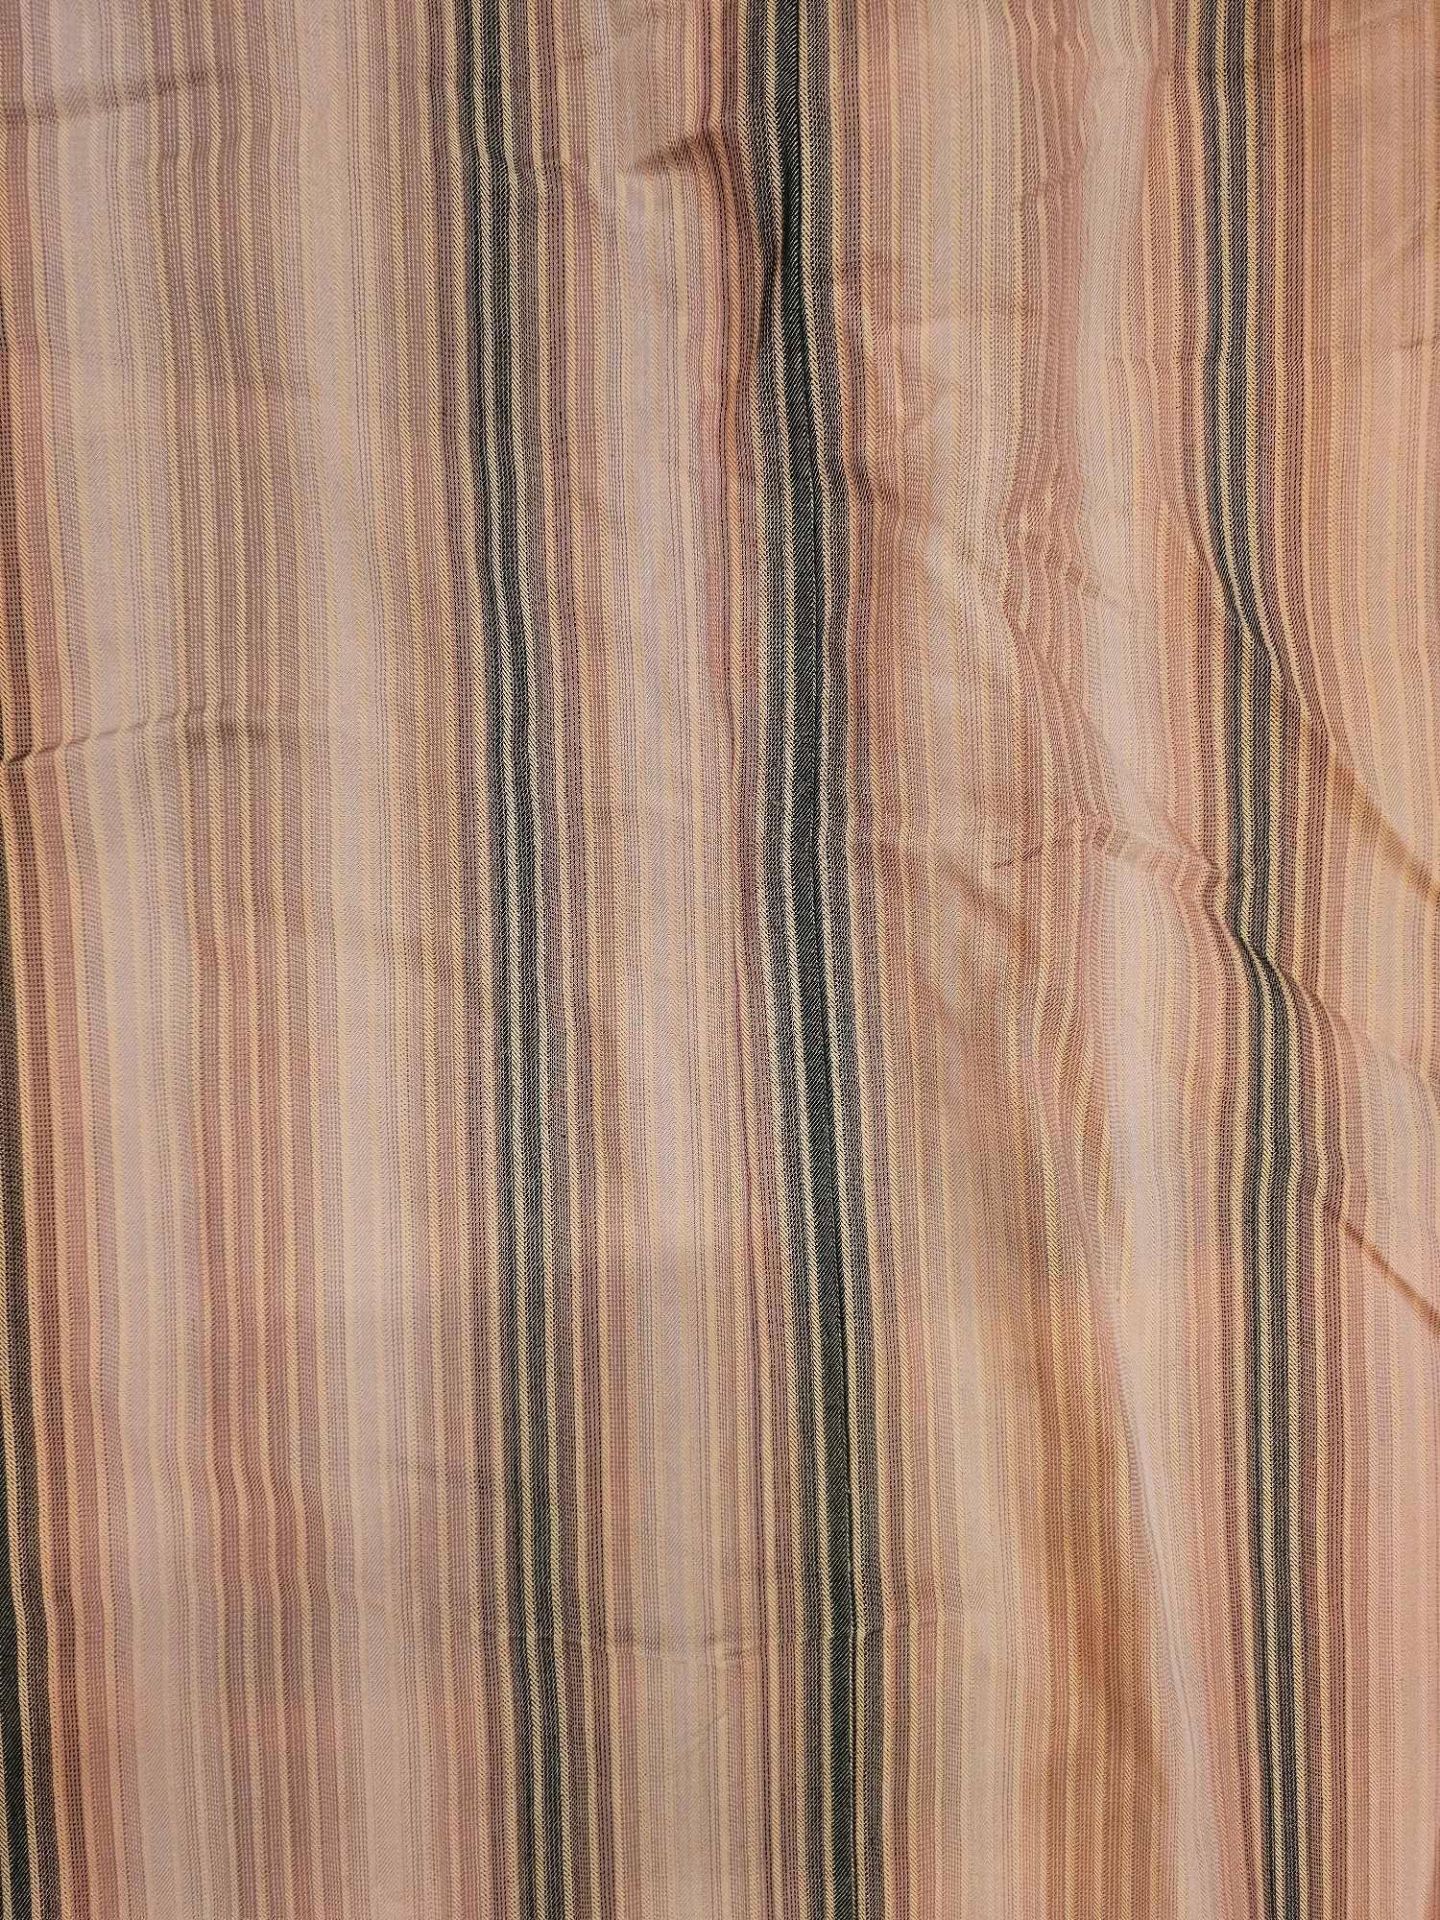 A Pair Silk Drape Pink /Grey StripesSize -cm 132 x 310 Ref Dorch 56 - Image 3 of 3